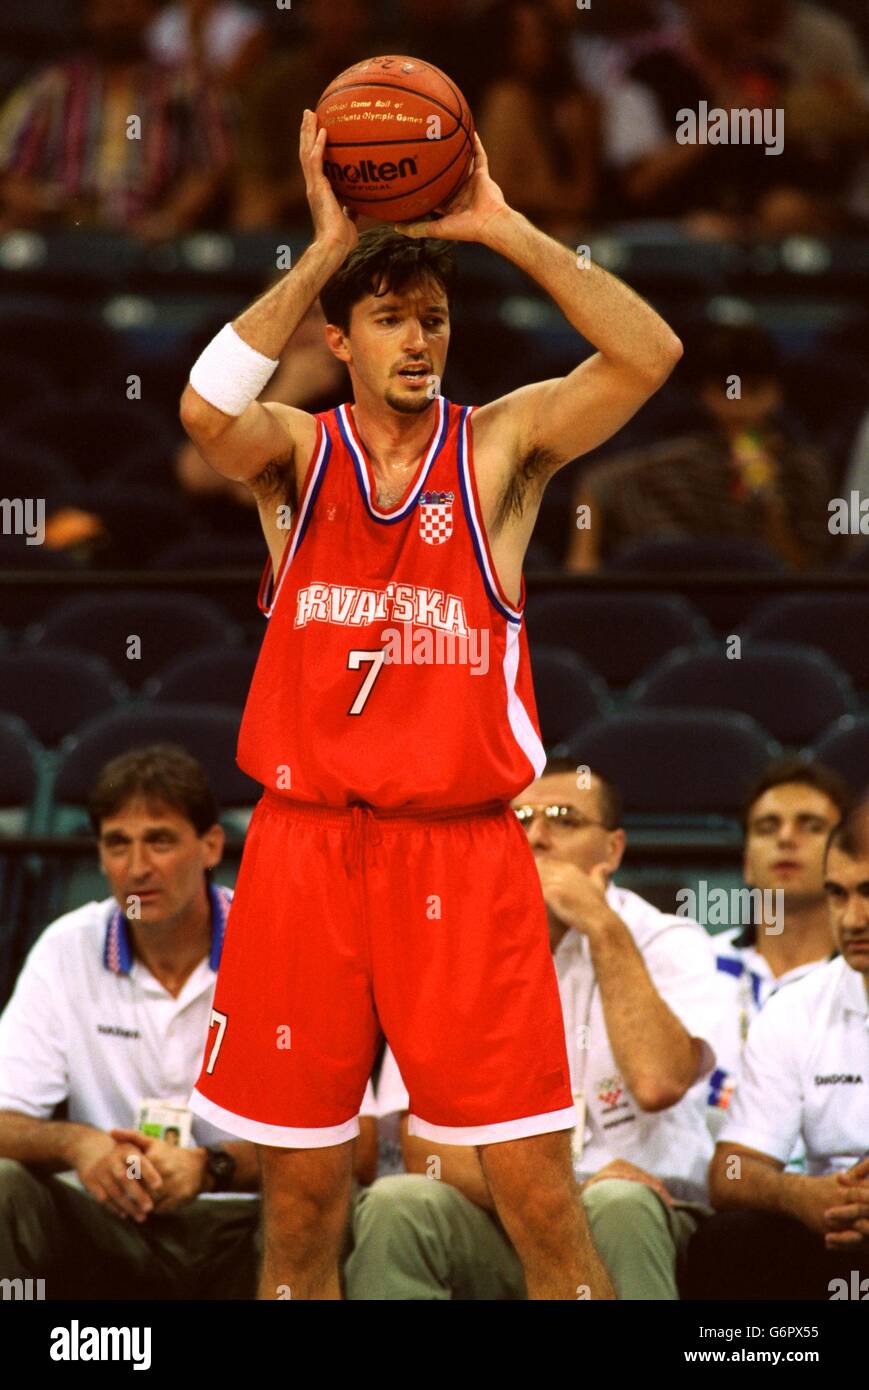 26-JUL-96 ... Atlanta Olympic Games ... Basketball - Argentina v Croatia  ... Toni Kukoc, Croatia Stock Photo - Alamy